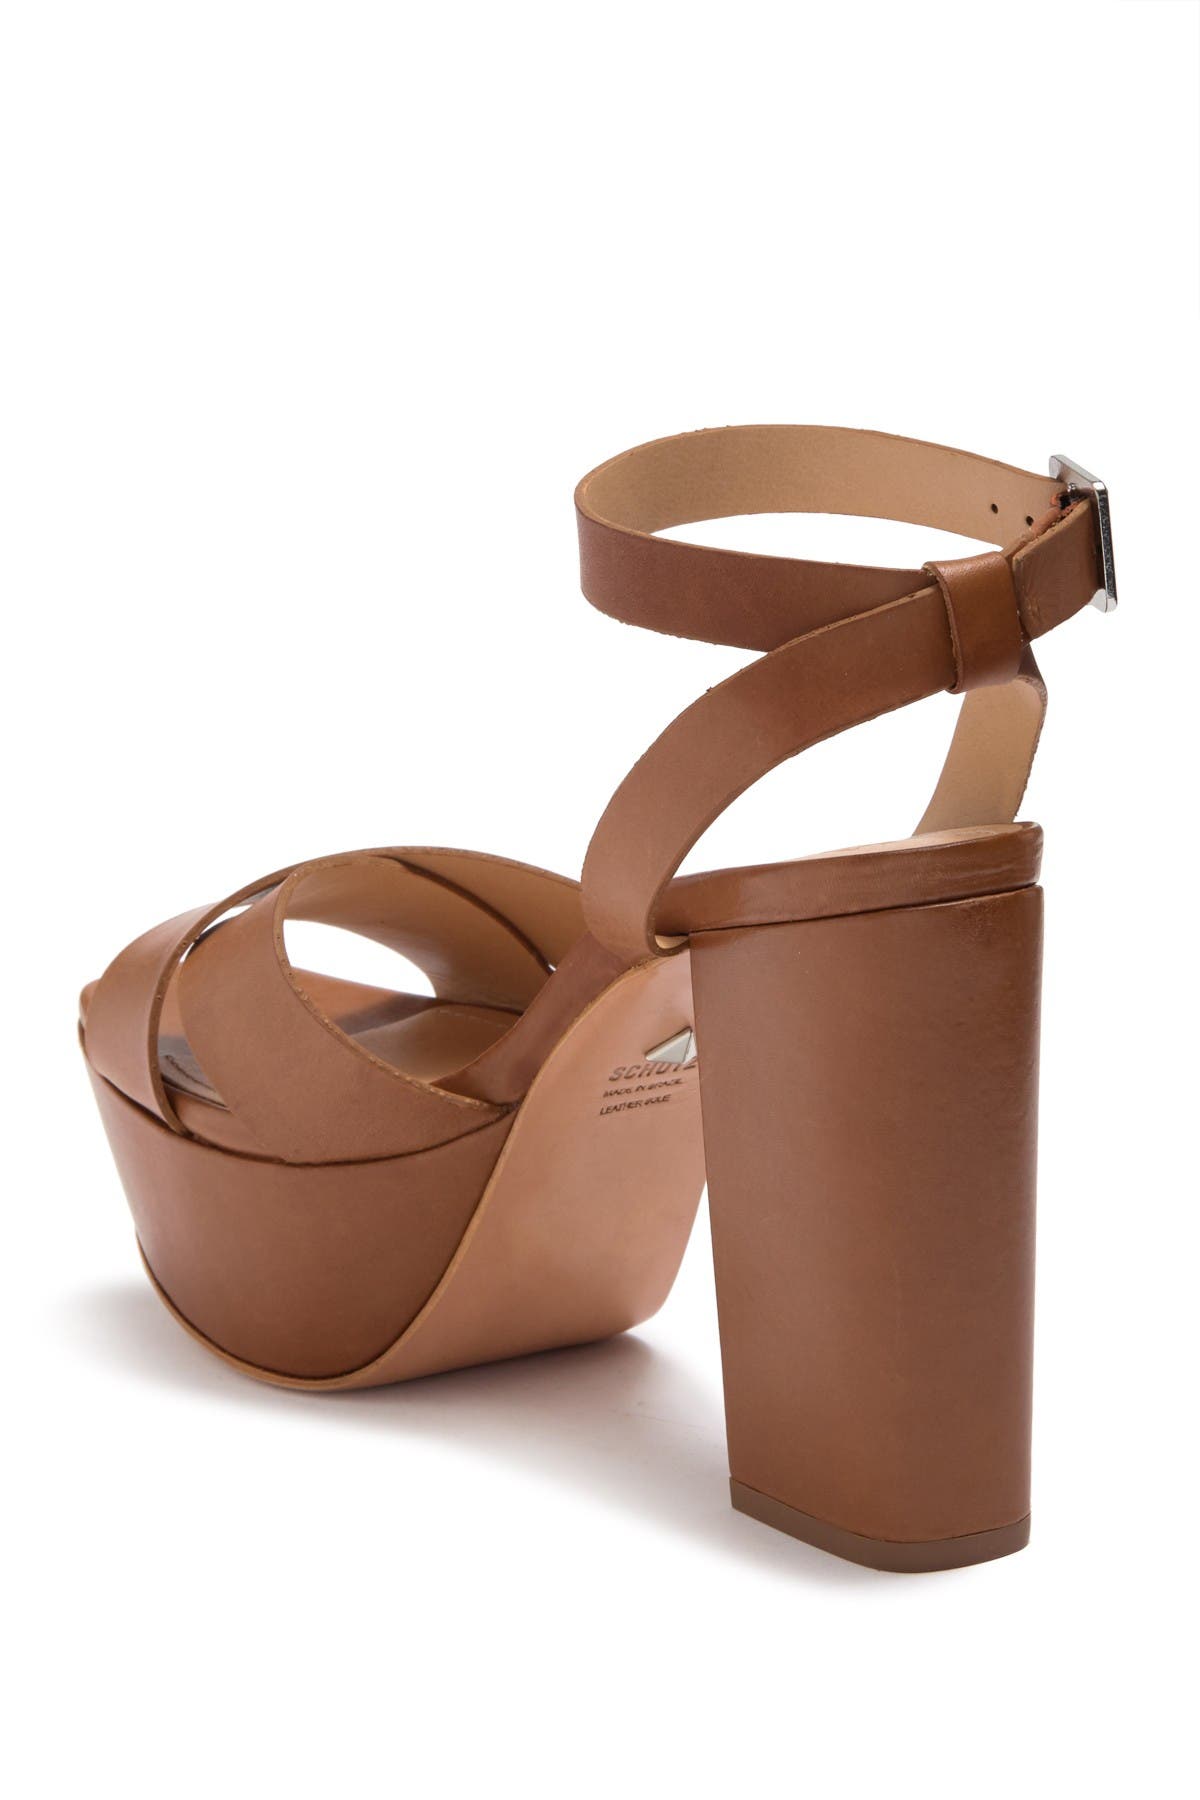 schutz saphire platform heels